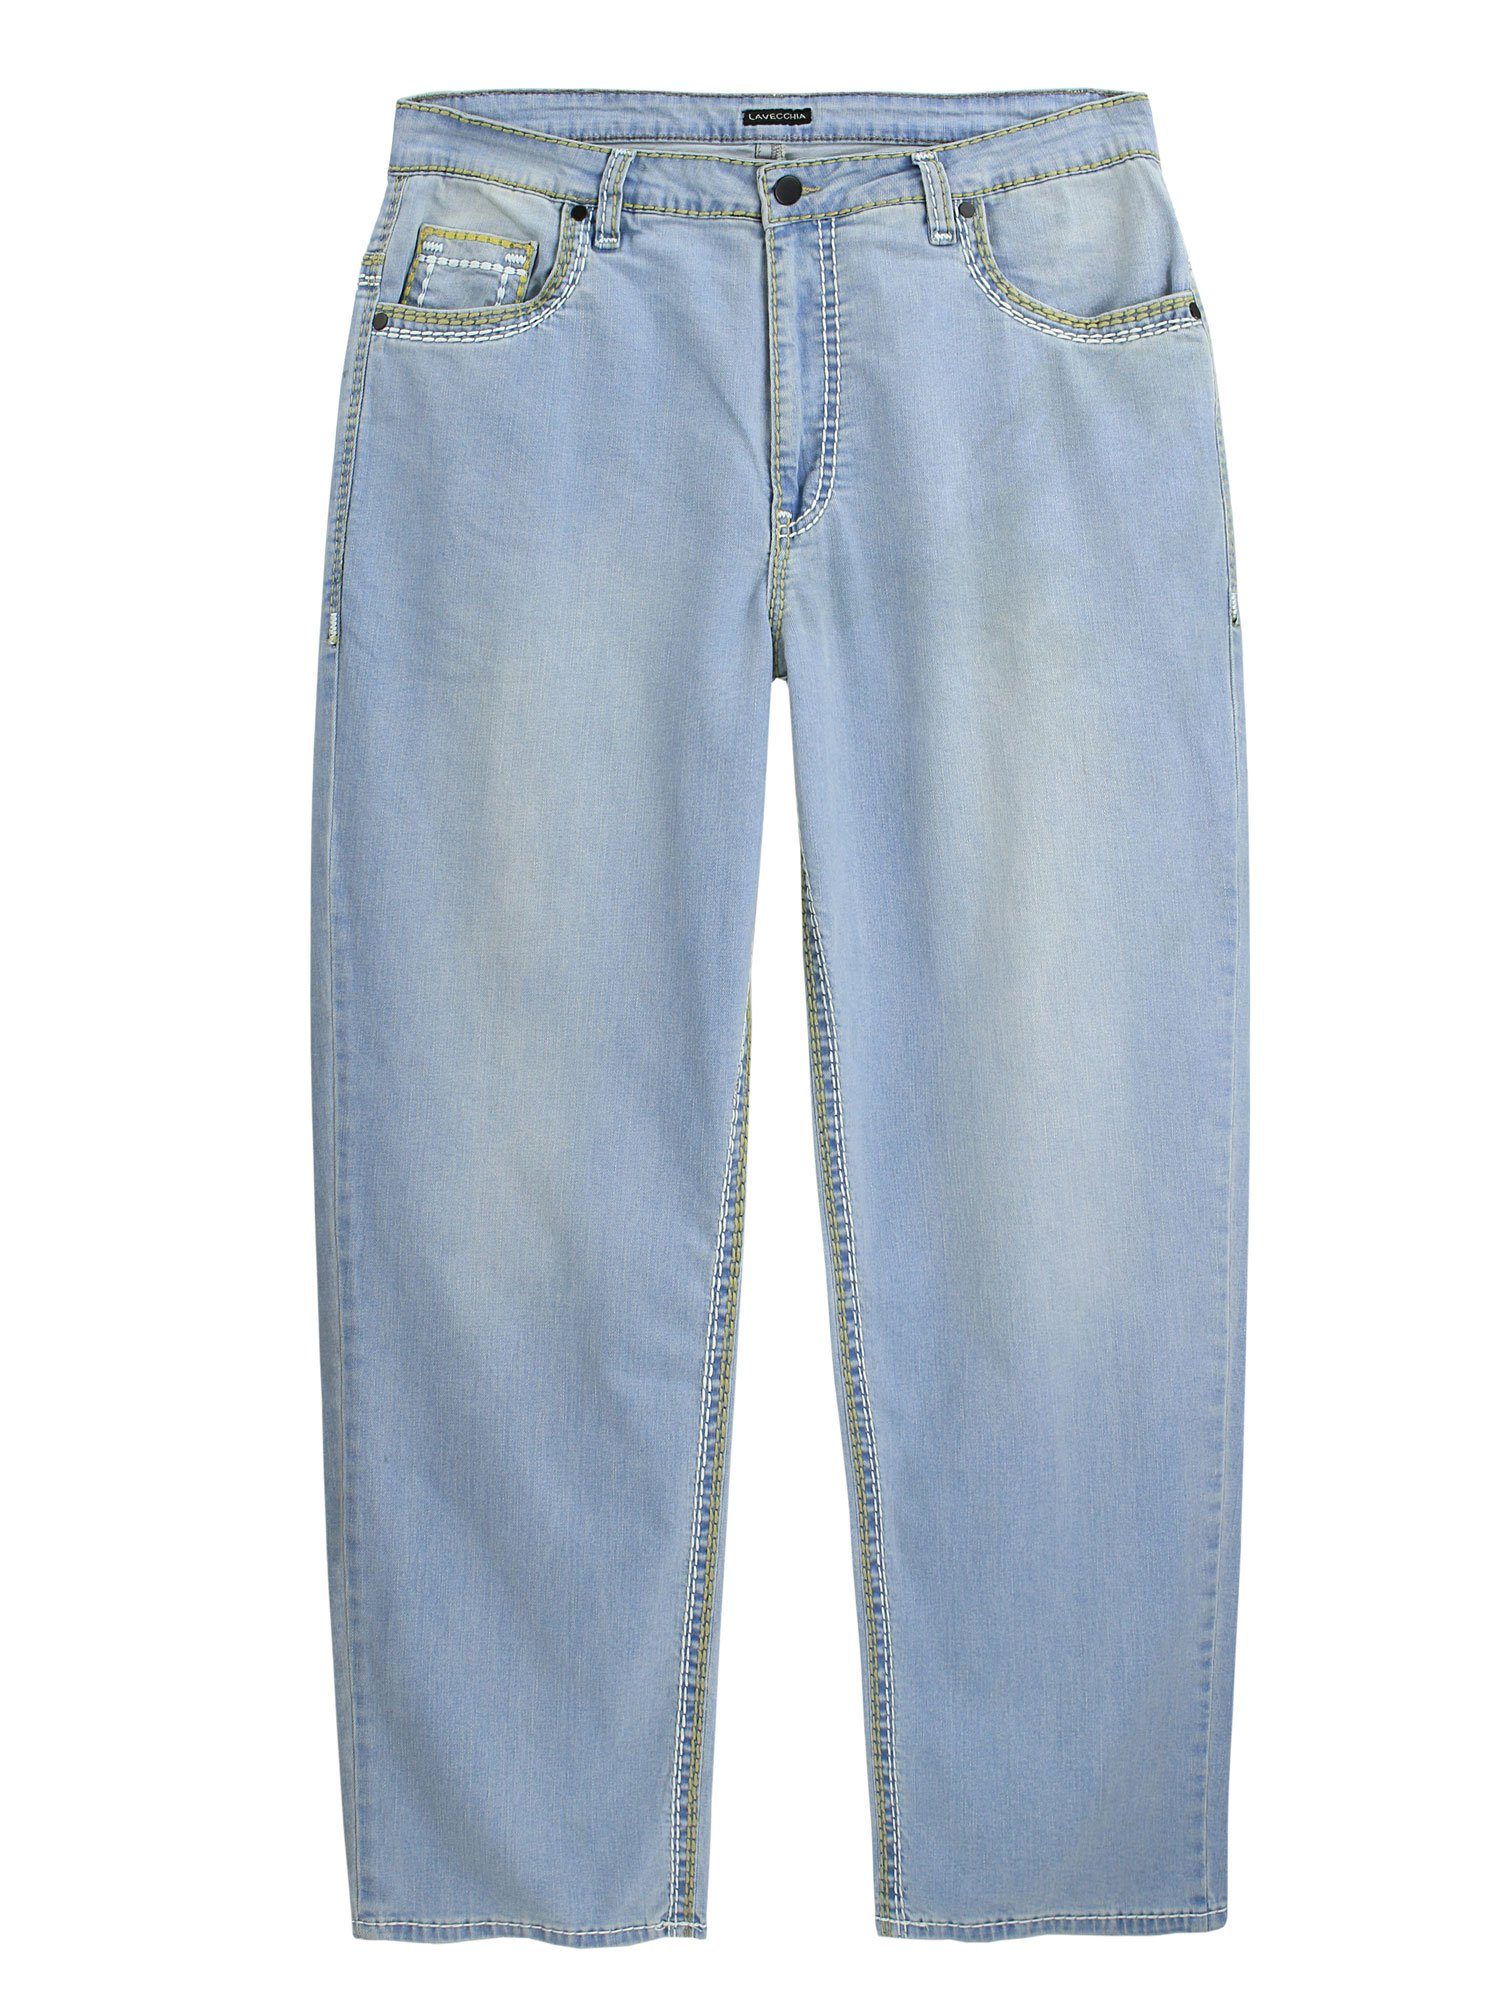 Lavecchia Comfort-fit-Jeans Übergrößen Herren Jeanshose LV-503 Stretch mit Elasthan & dicker Naht hellblau